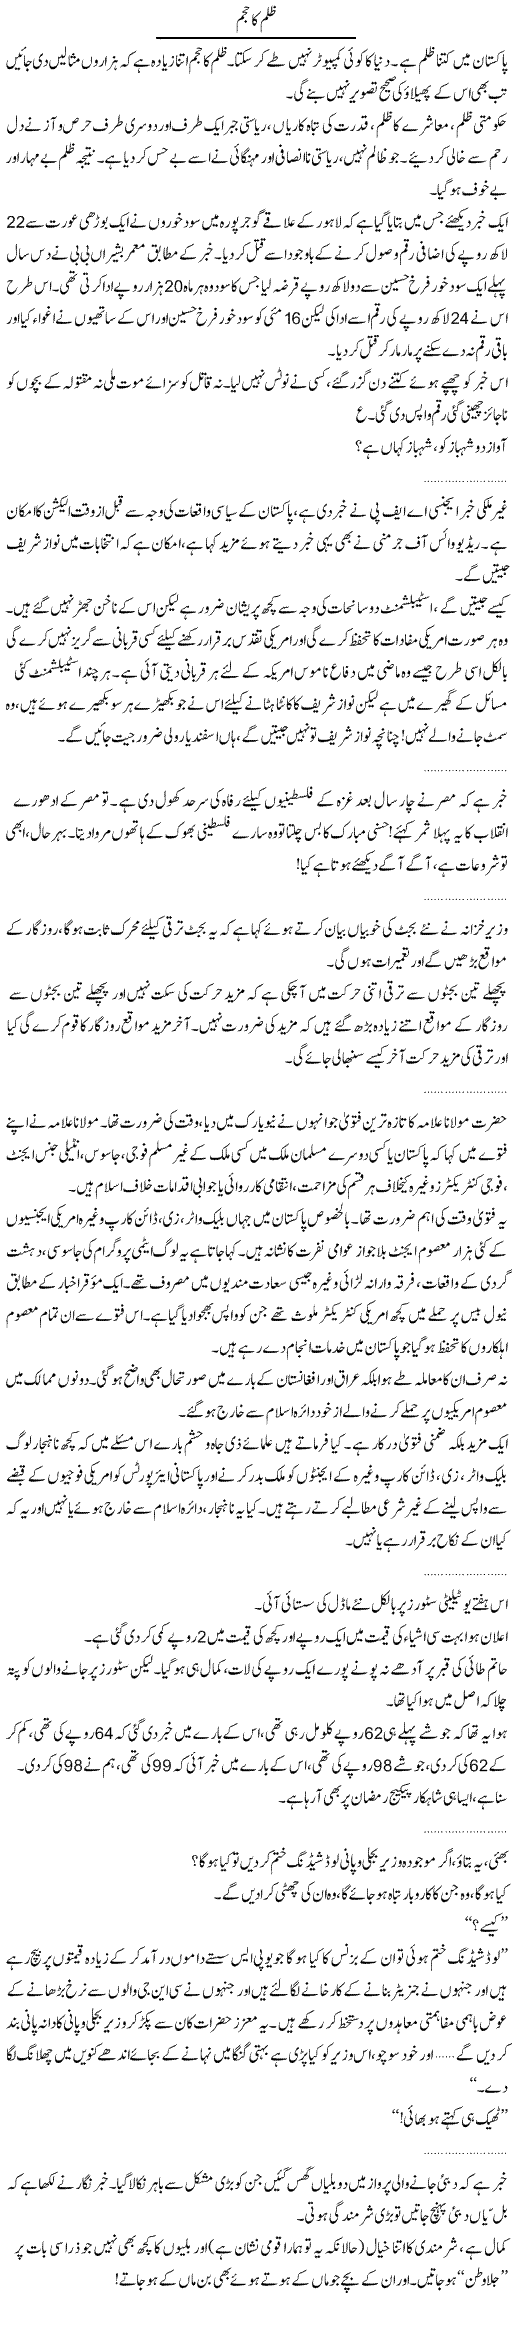 Injustice in Pakistan Express Column Abdullah Tariq 1 June 2011